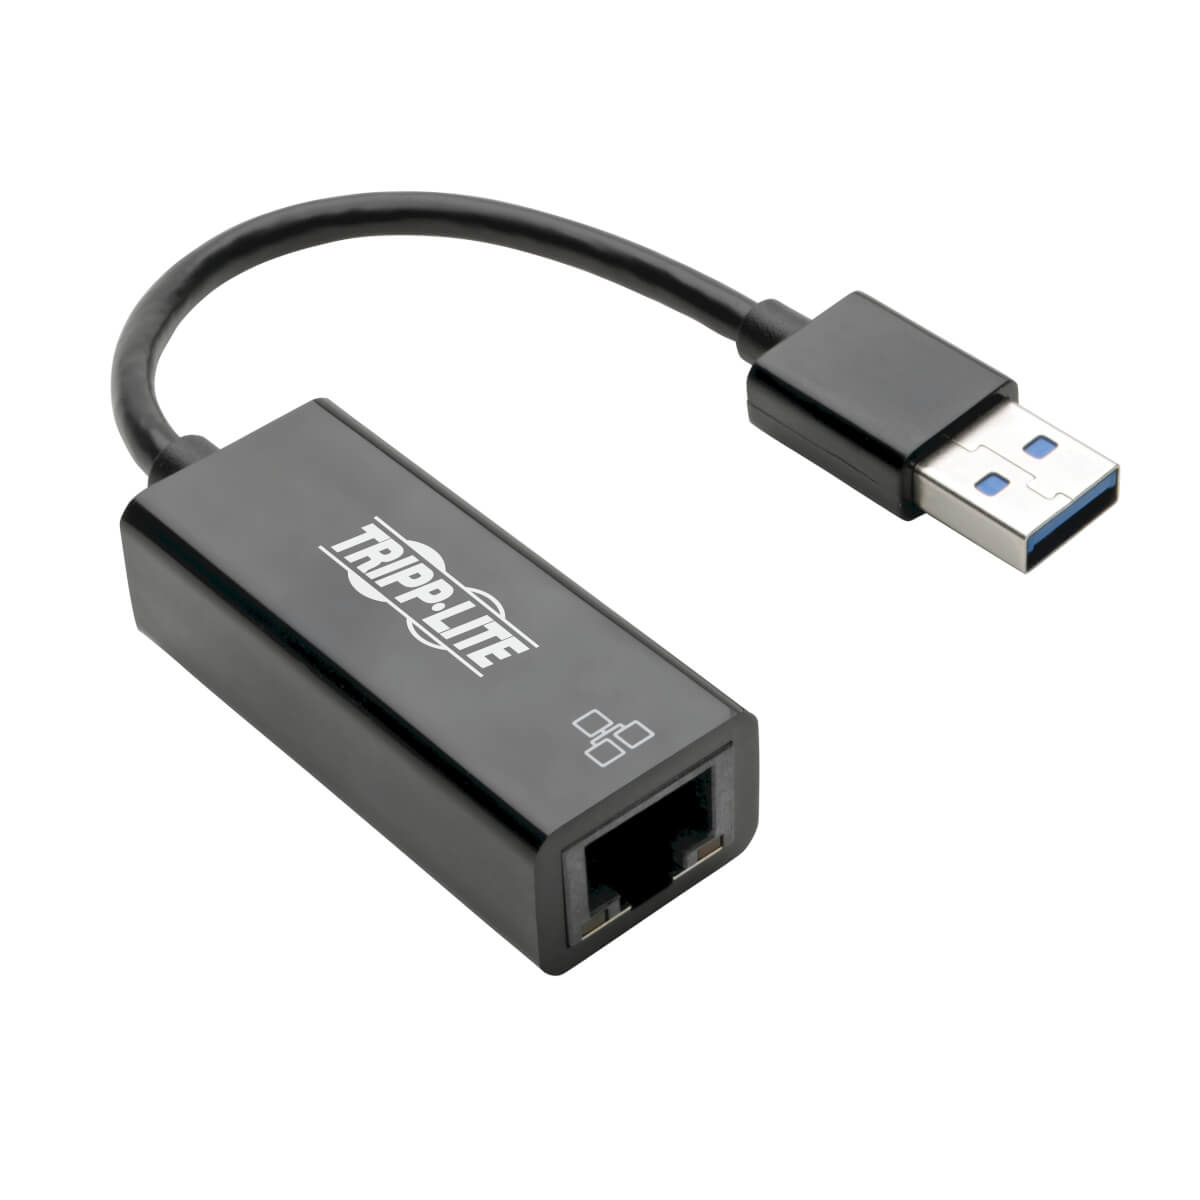 Photos - Network Card TrippLite Tripp Lite U336-000-R USB 3.0 to Gigabit Ethernet NIC Network Adapter 